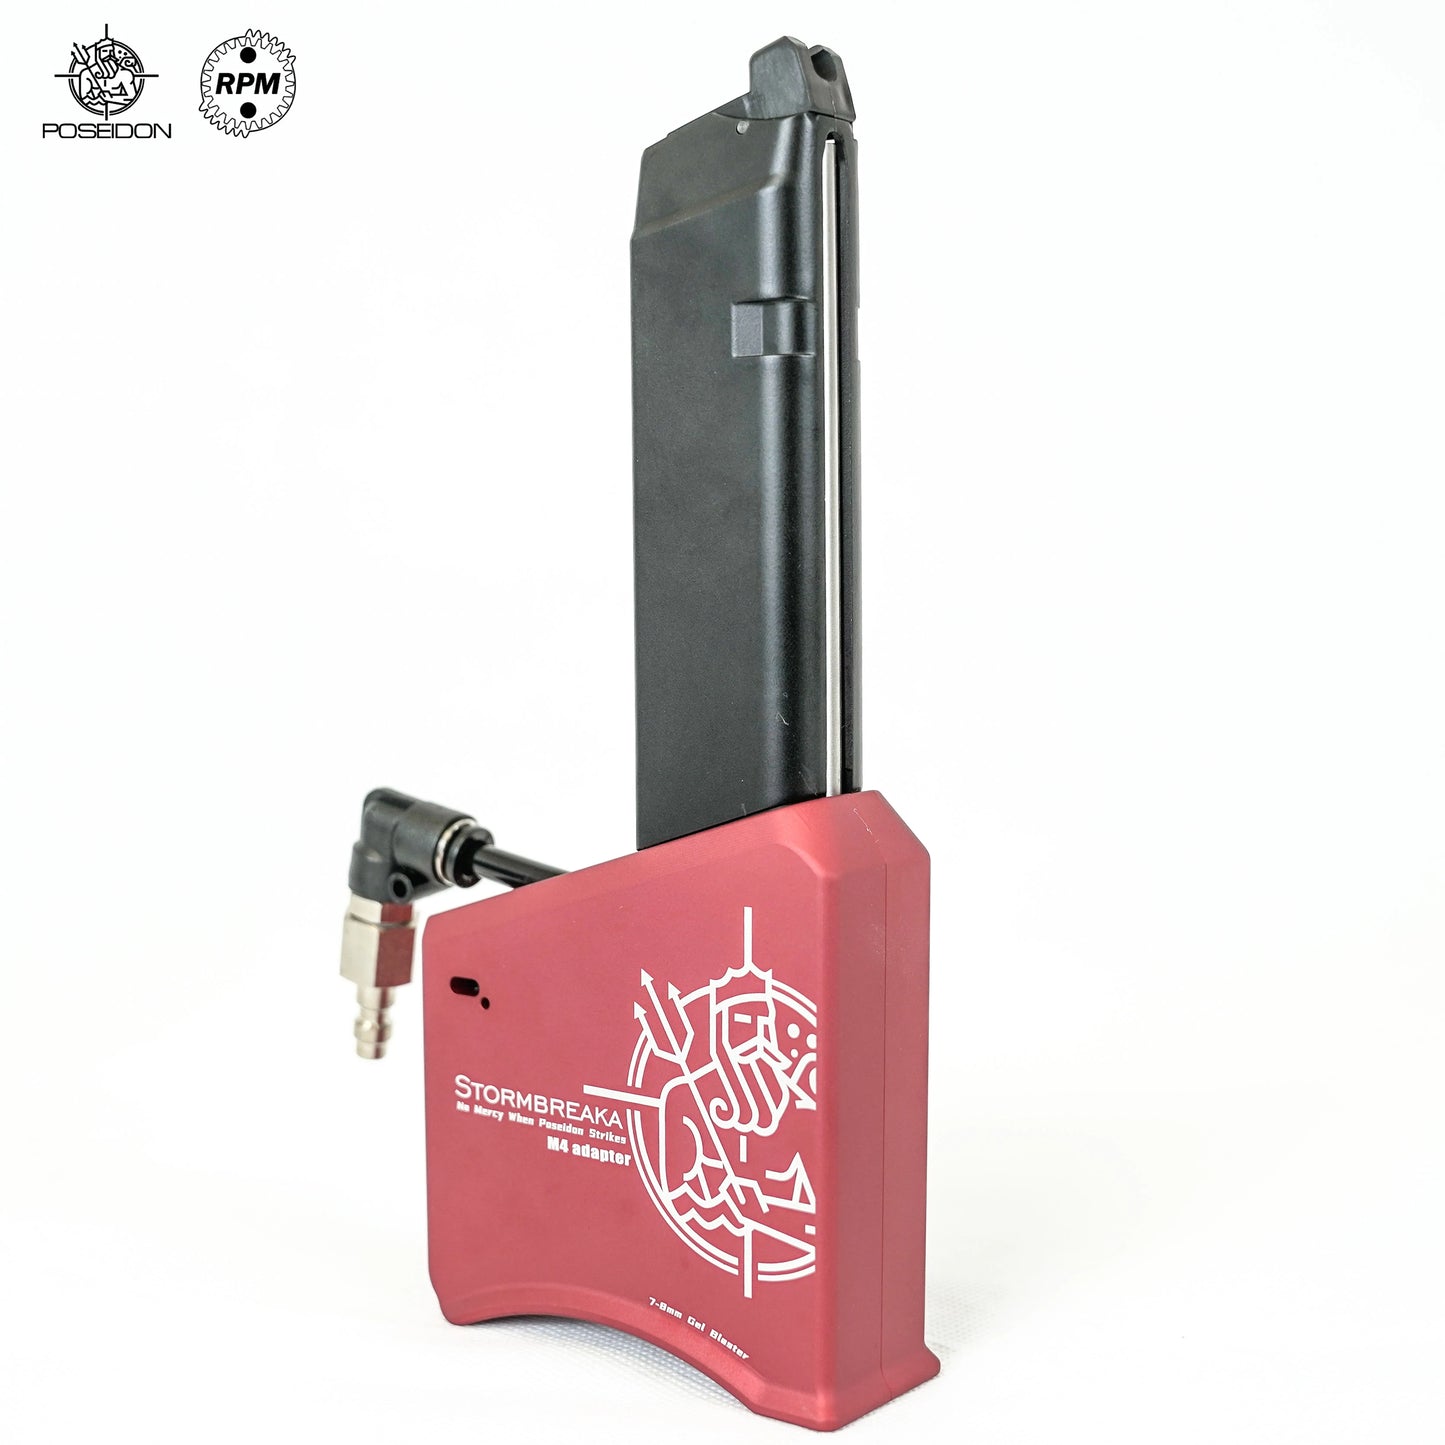 Poseidon/RPM Stormbreaka M4 adaptor with magazine (Glock) - Gel Blaster Guns, Pistols, Handguns, Rifles For Sale